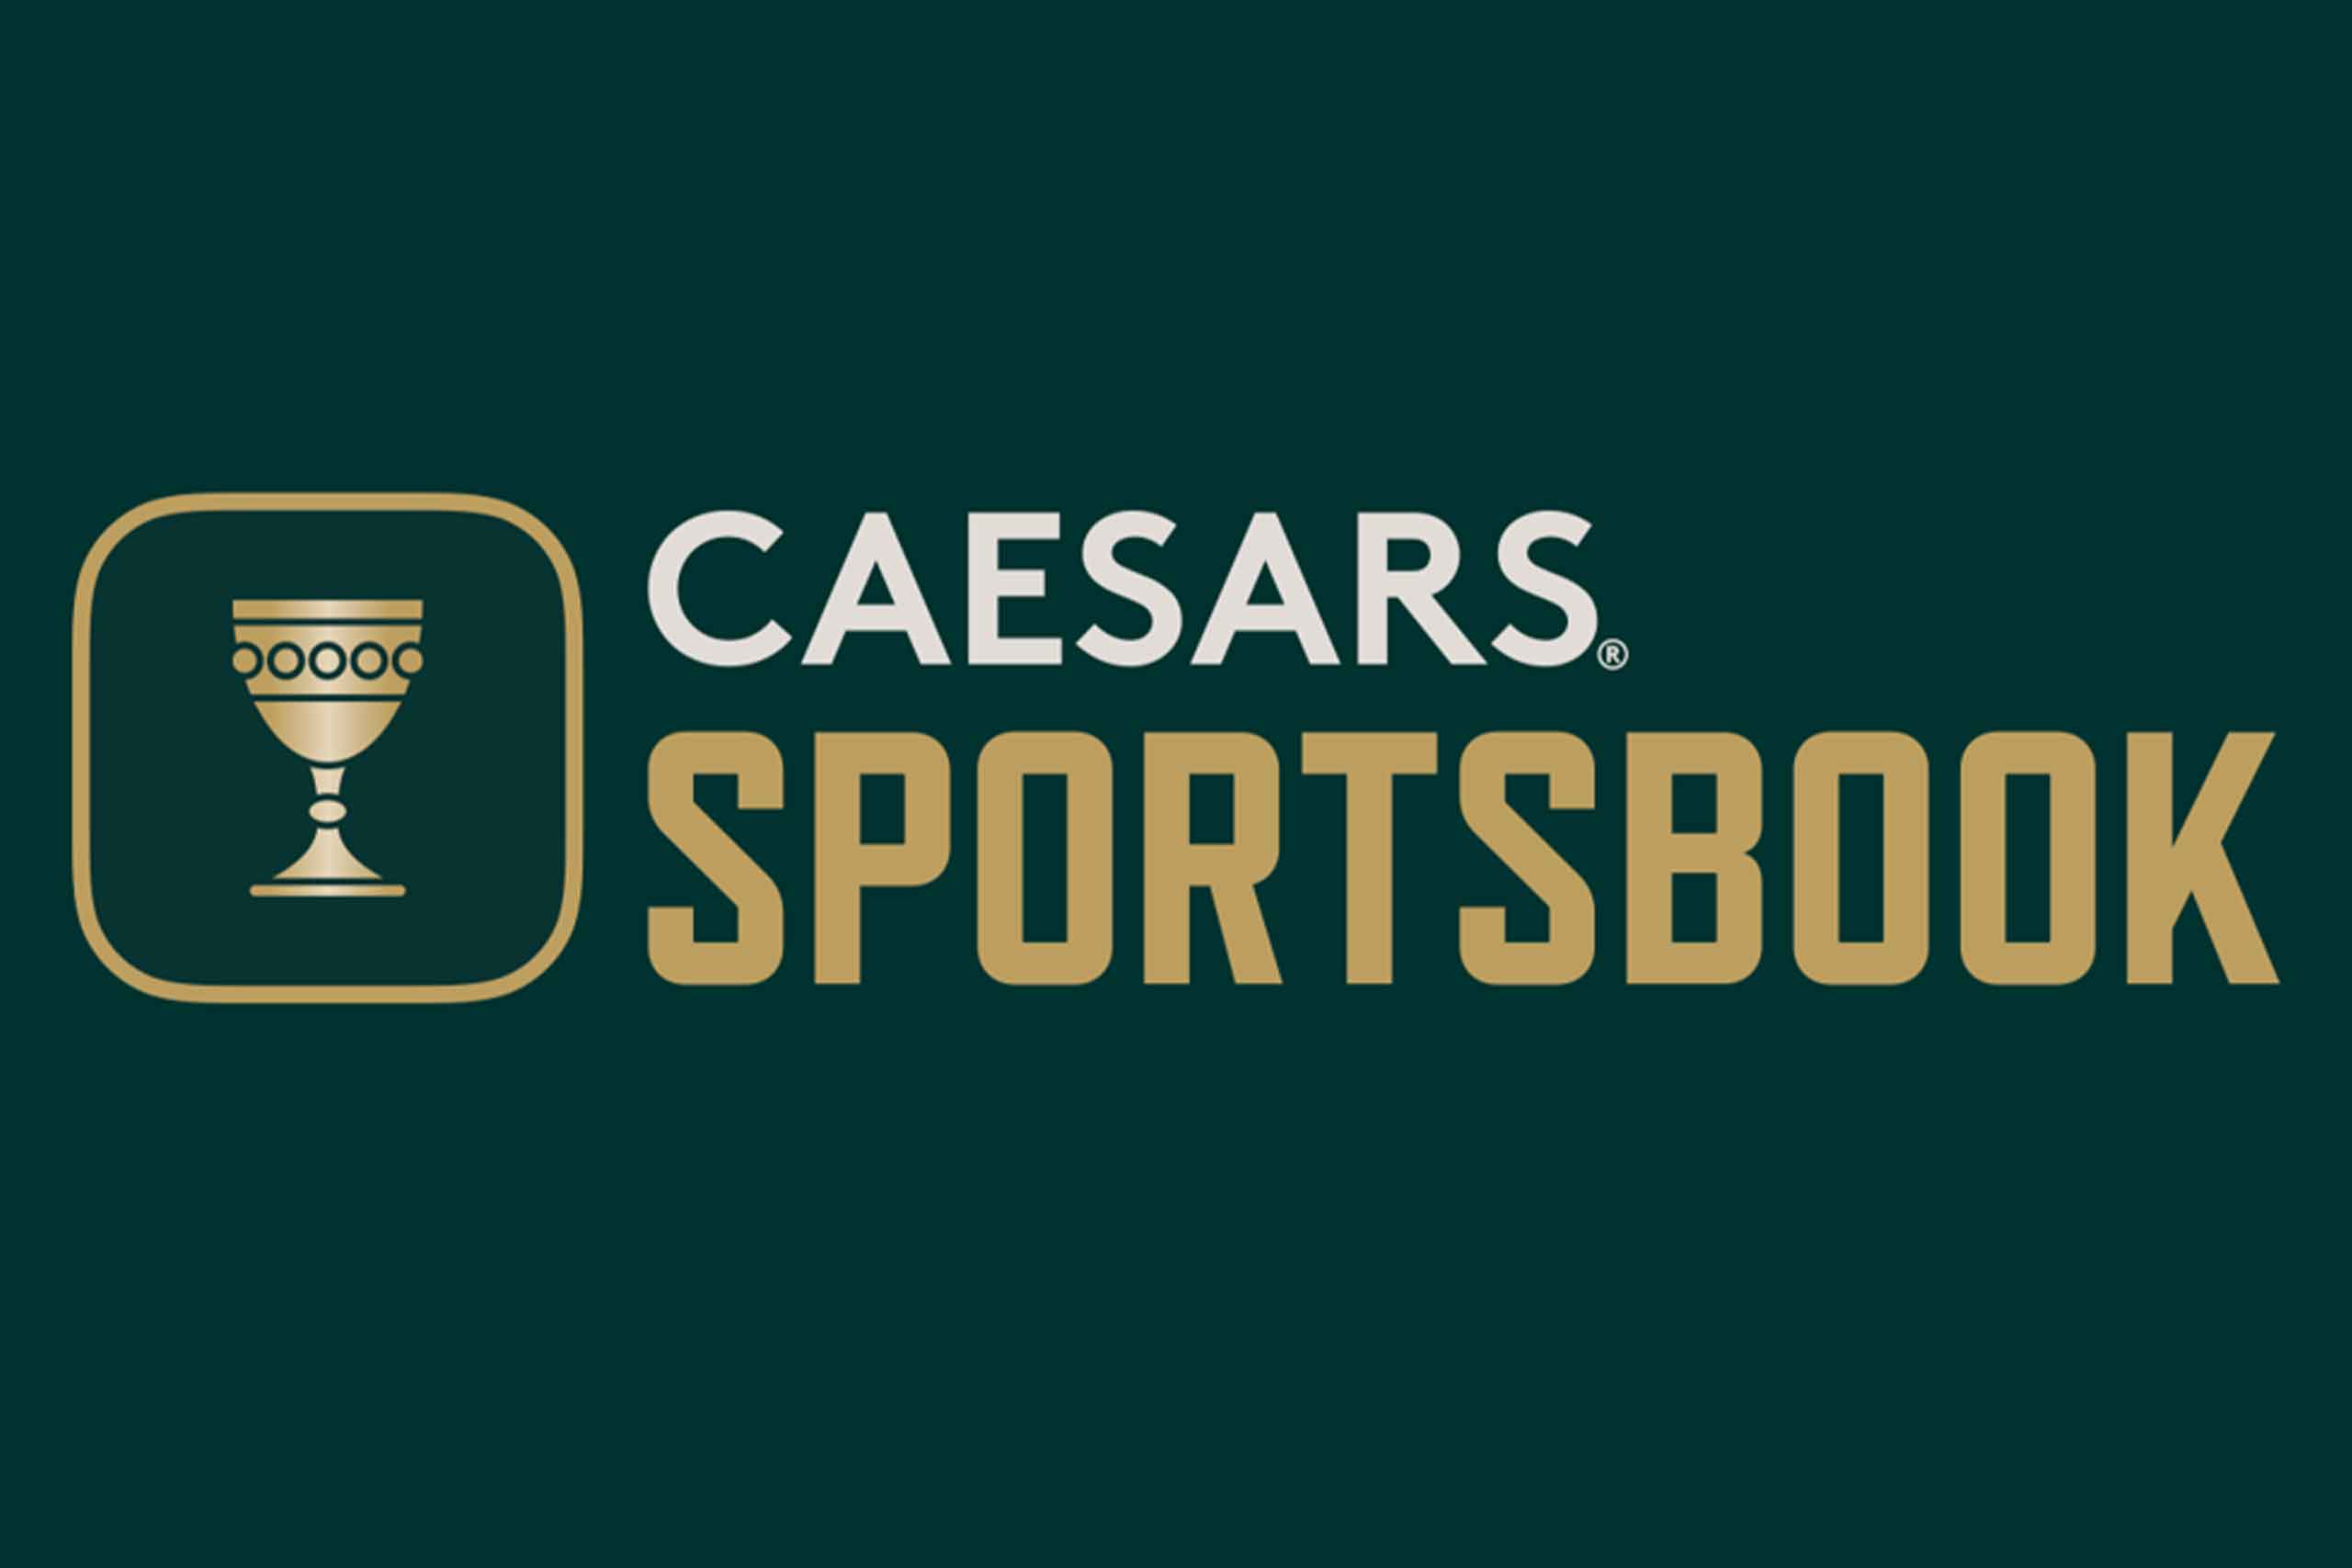 caesars sportsbook logo